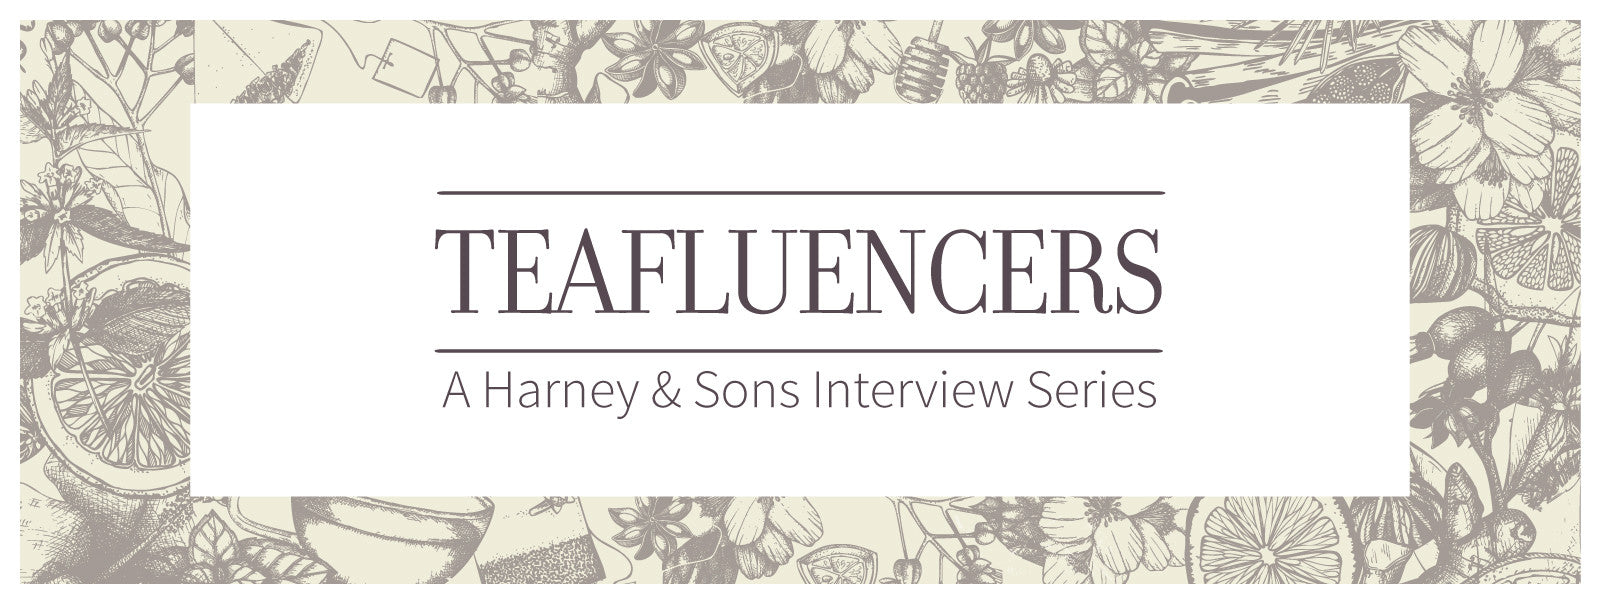 Harney and Sons Teafluencer Joel Banta